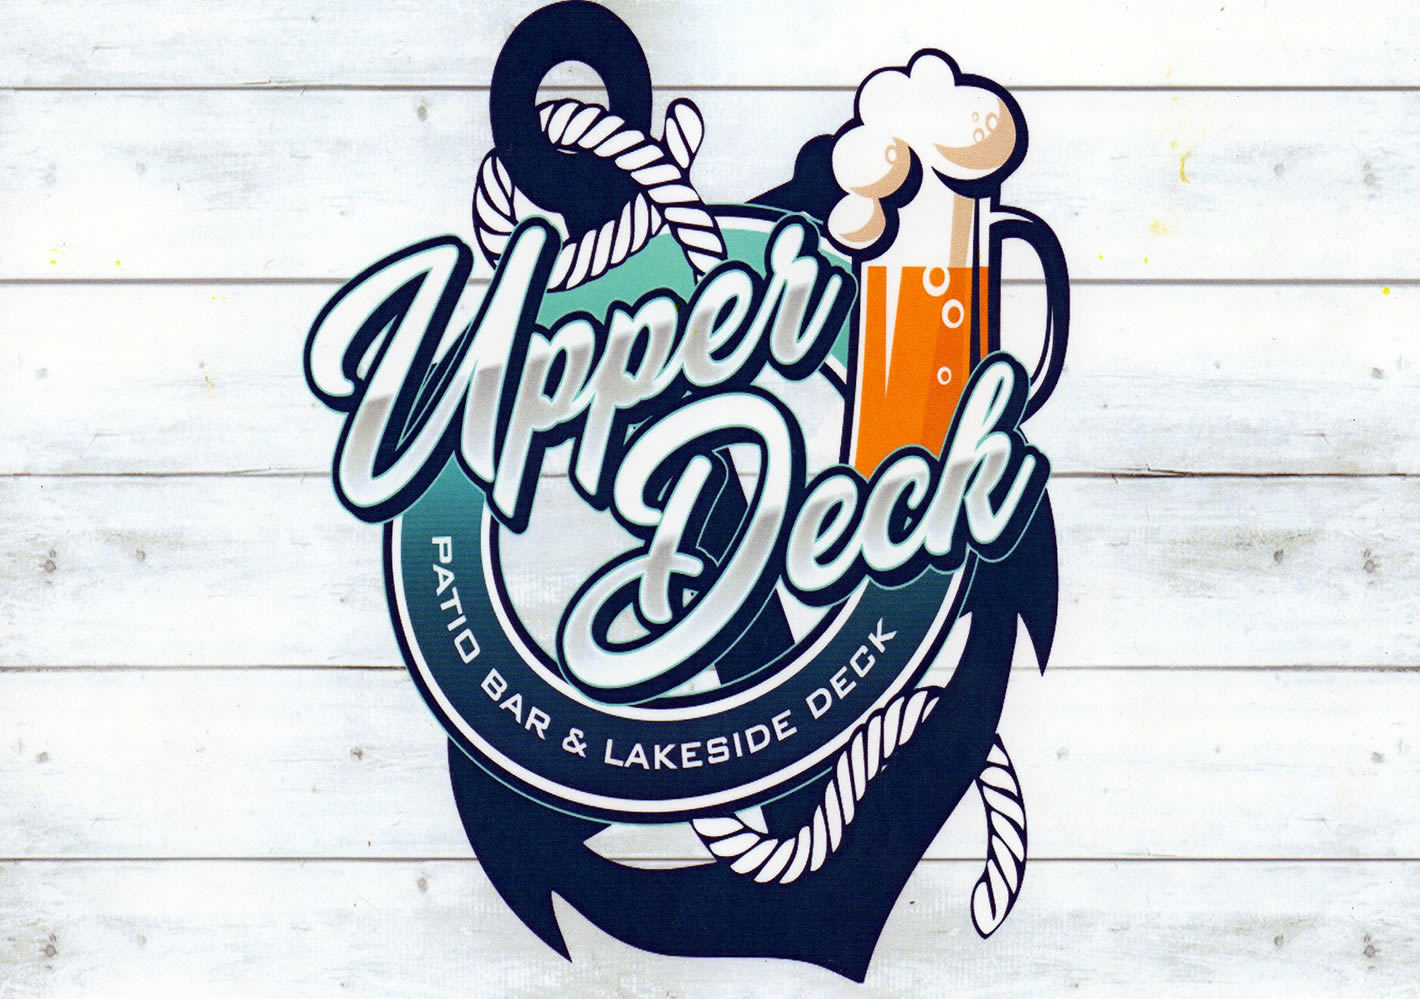 Upper Deck Lakeside Bar & Grille